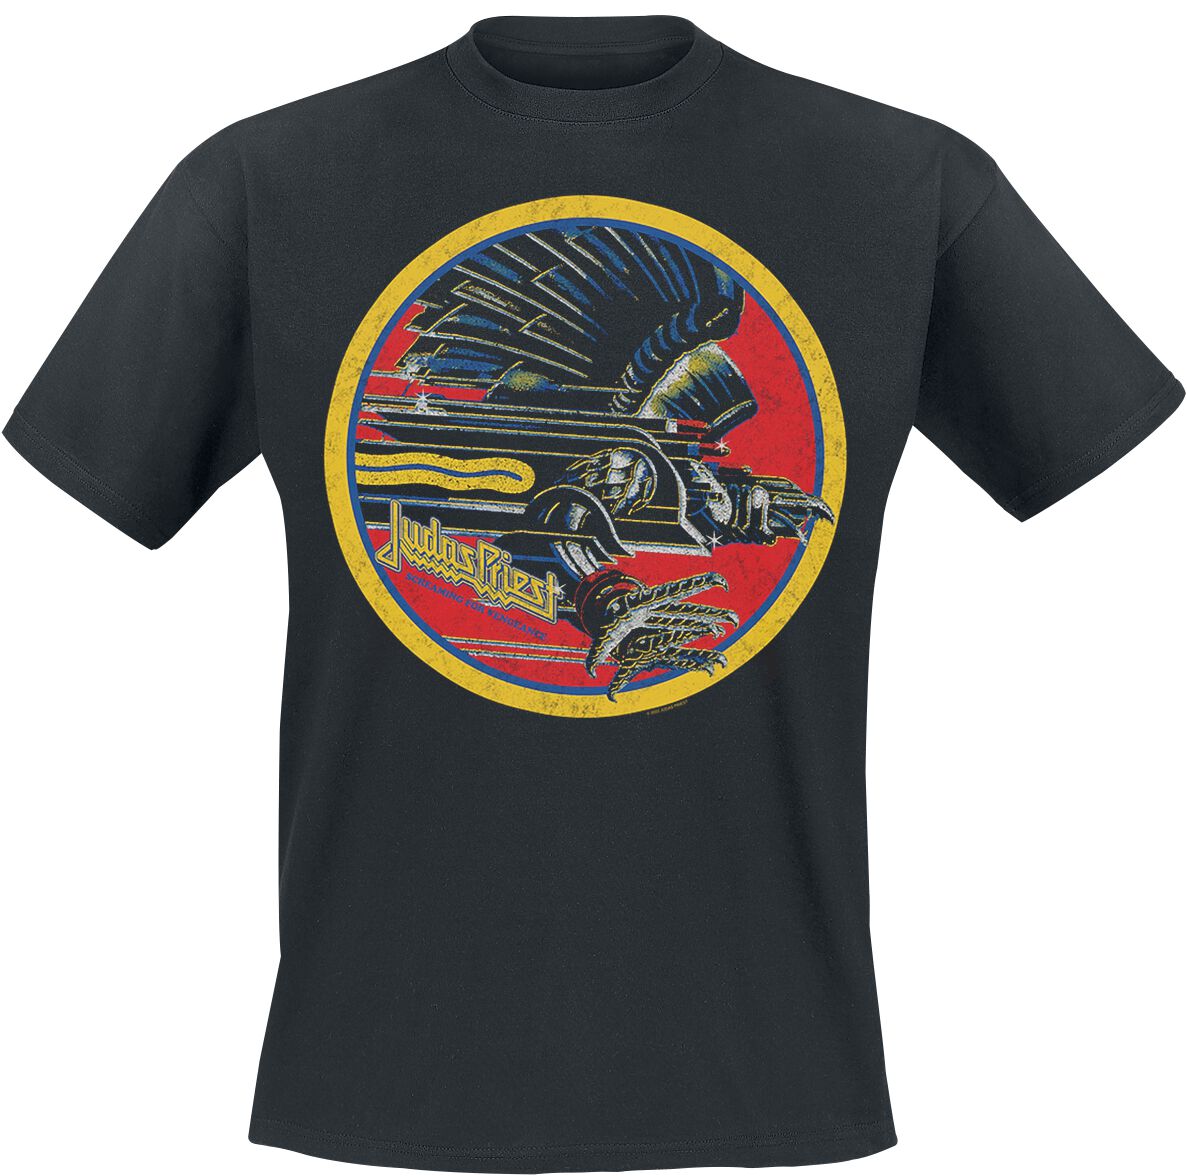 Judas Priest Vintage Distressed Circle T-Shirt black